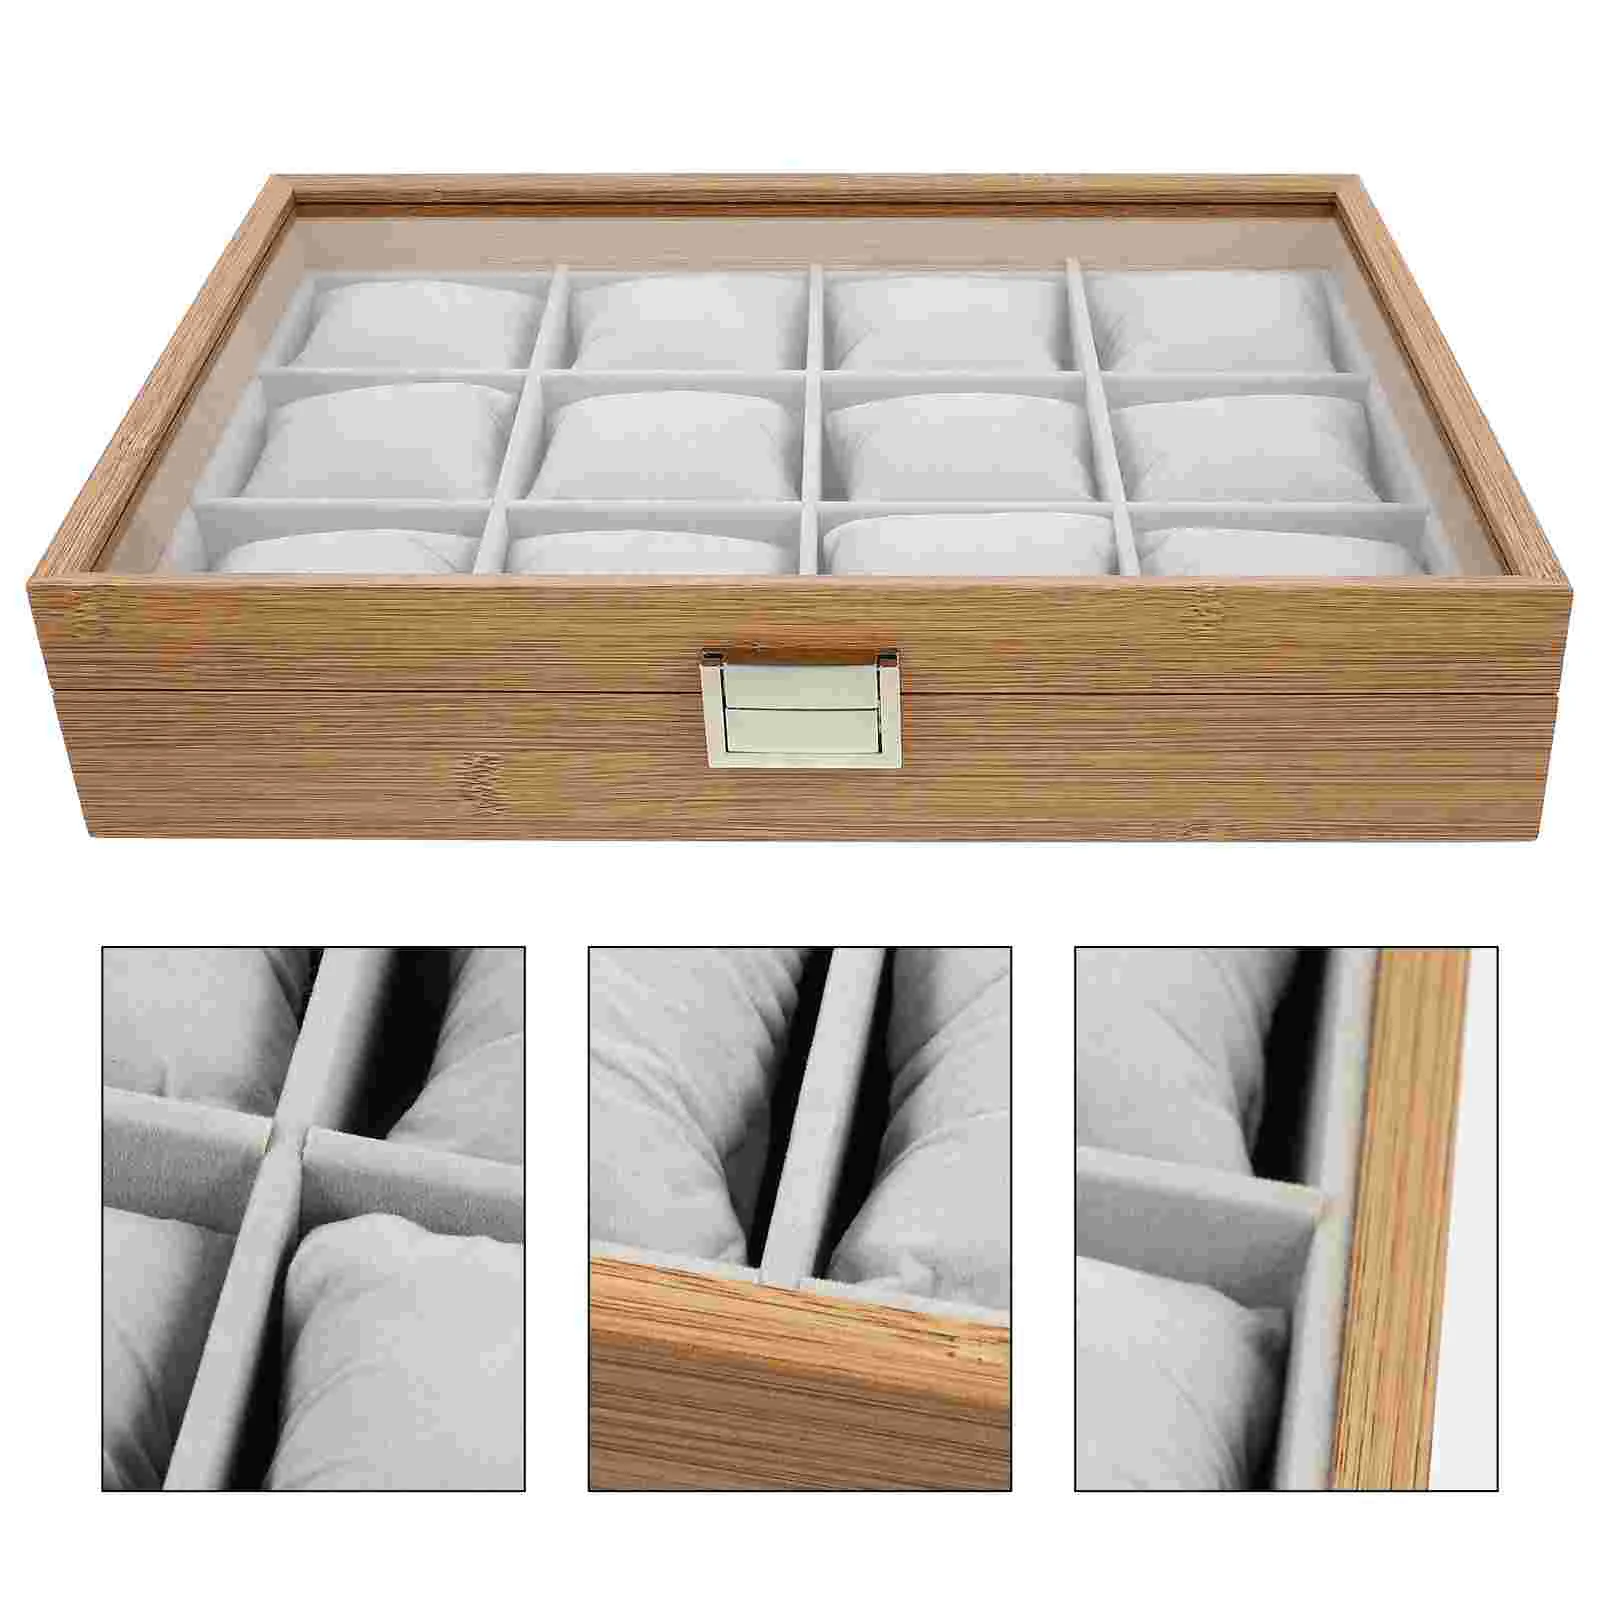 

Watch Box Jewelry Organizer Bracelet Holder Stand Case Wood Storage Seco Gray Velvet Display Tray Wooden Decor